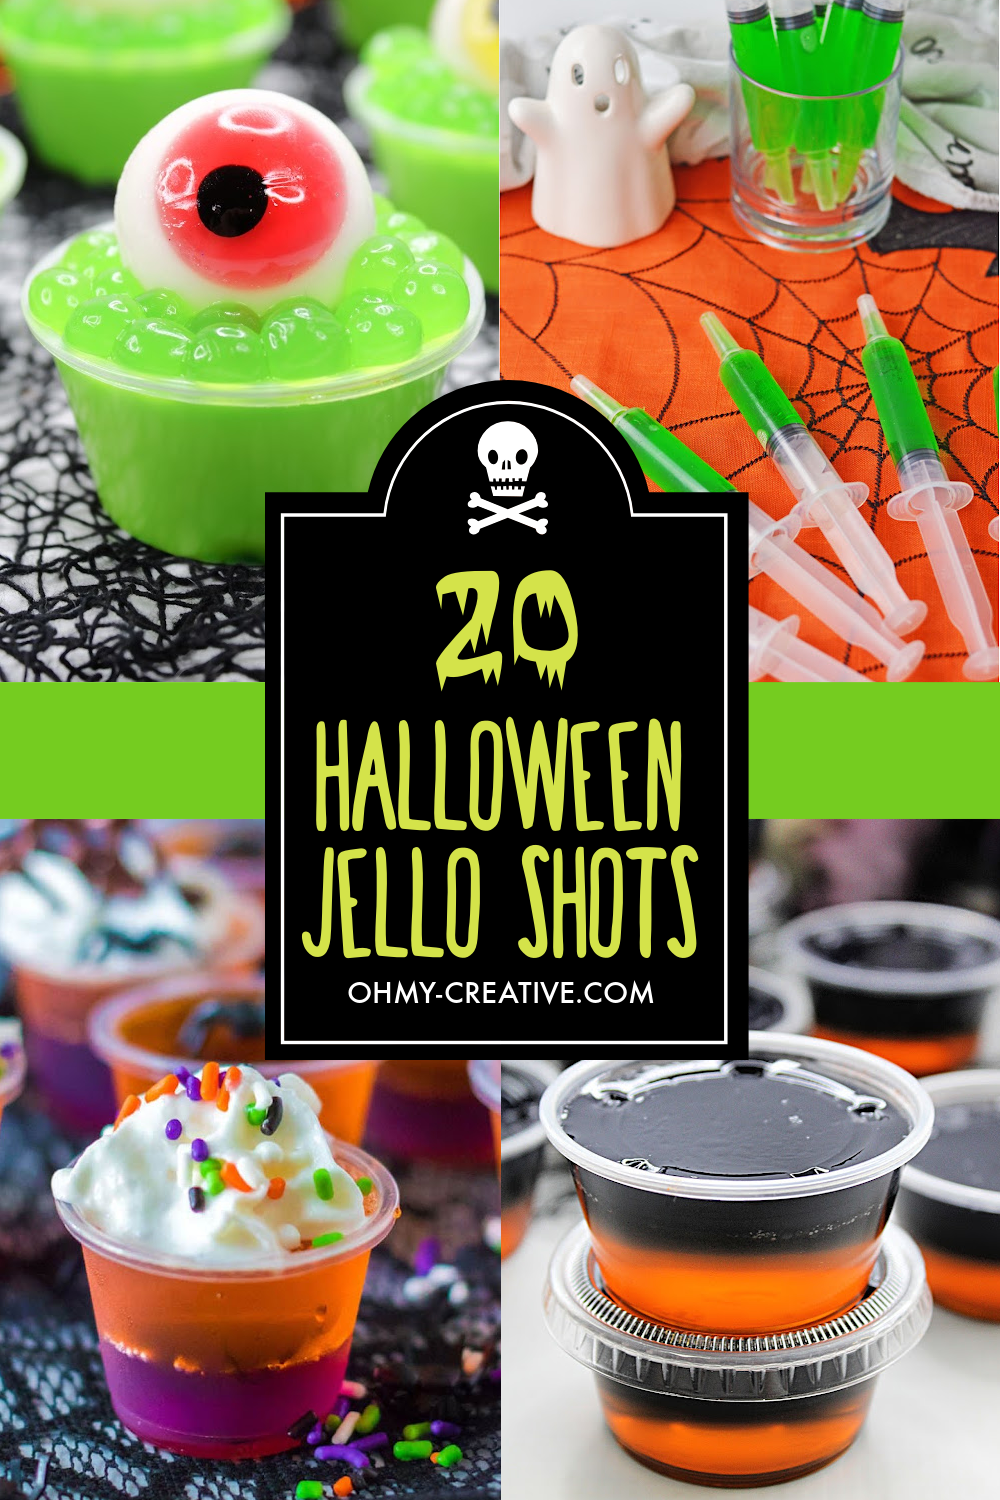 A collage of creative Halloween eyeball jello shots and syringe jello shots.